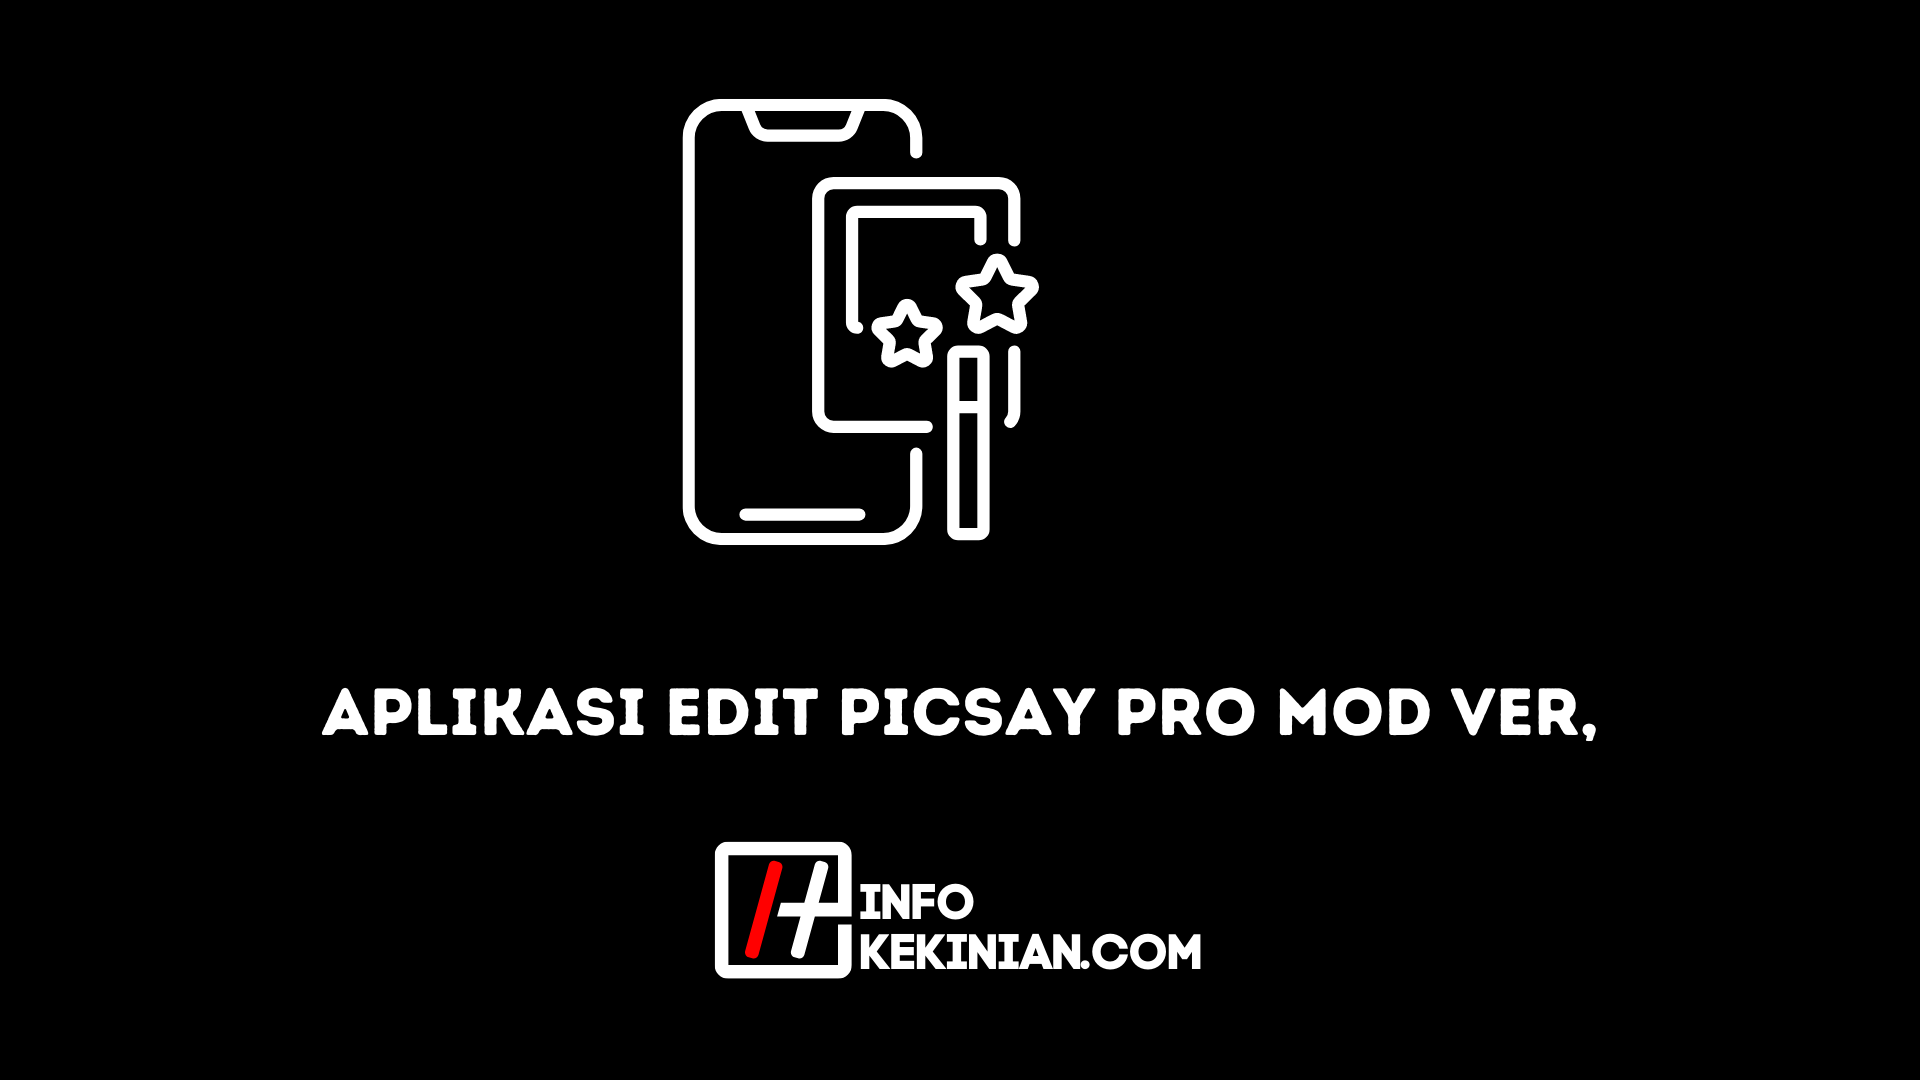 Bearbeiten App Picsay Pro Mod Ver, Editor näher!